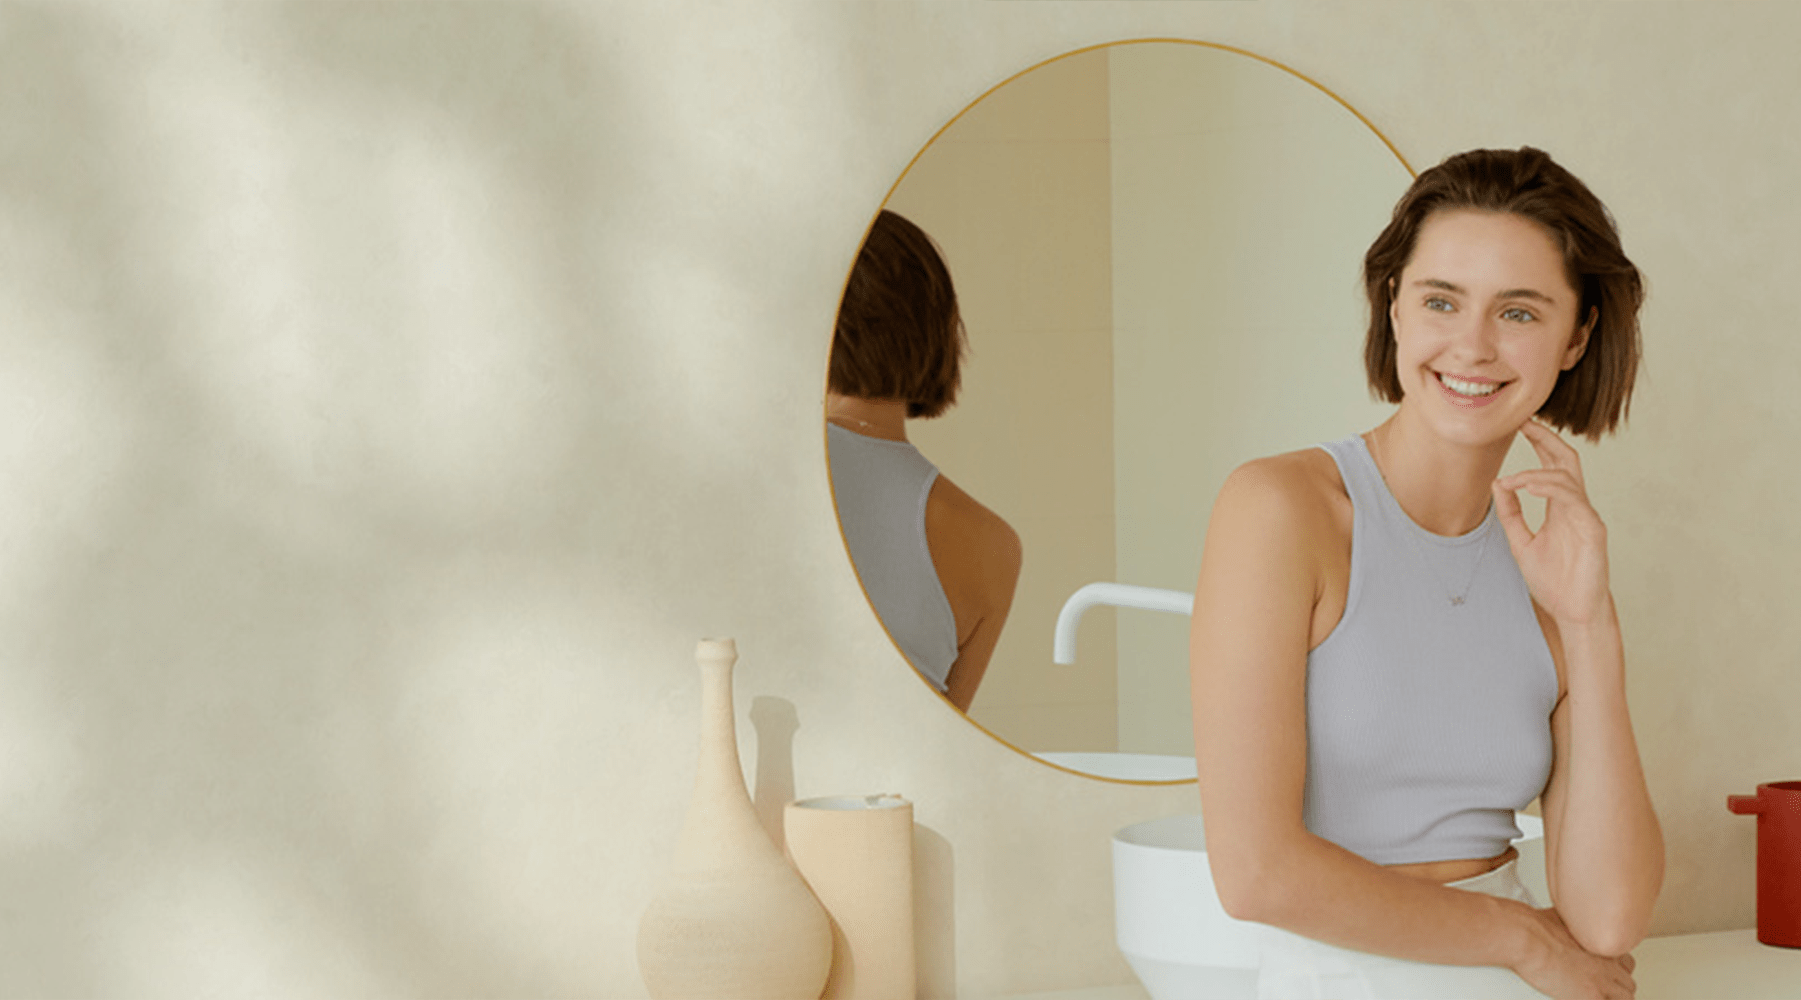 Persona sentada frente a un espejo